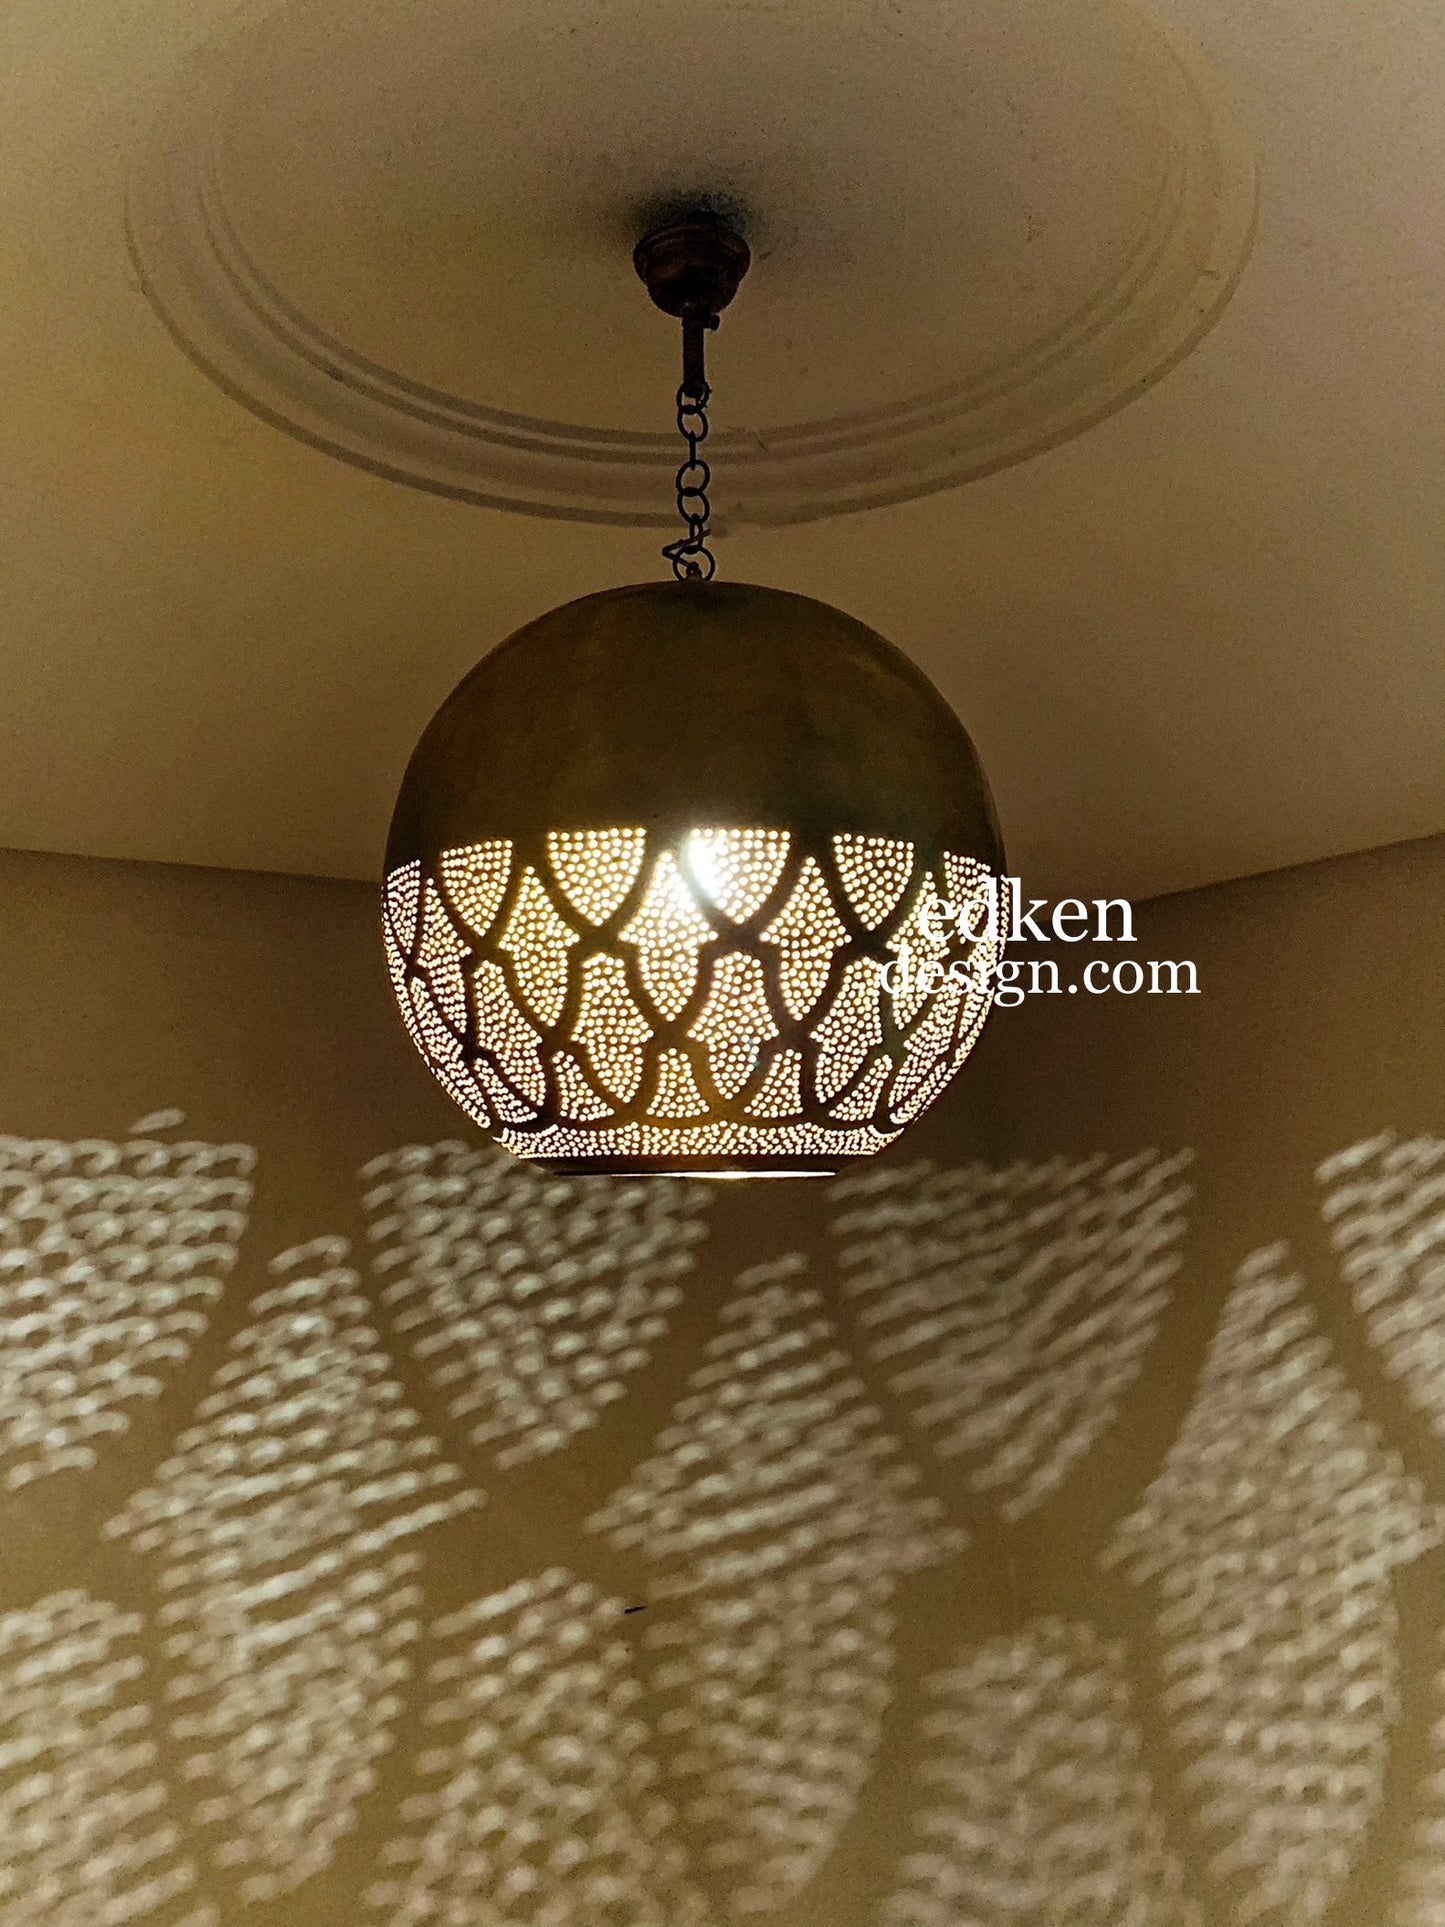 EDKEN LIGHTS - Morocco Ceiling Lamp Shades Globe Shape Fixture Ball pierced Hanging Brass Lights 